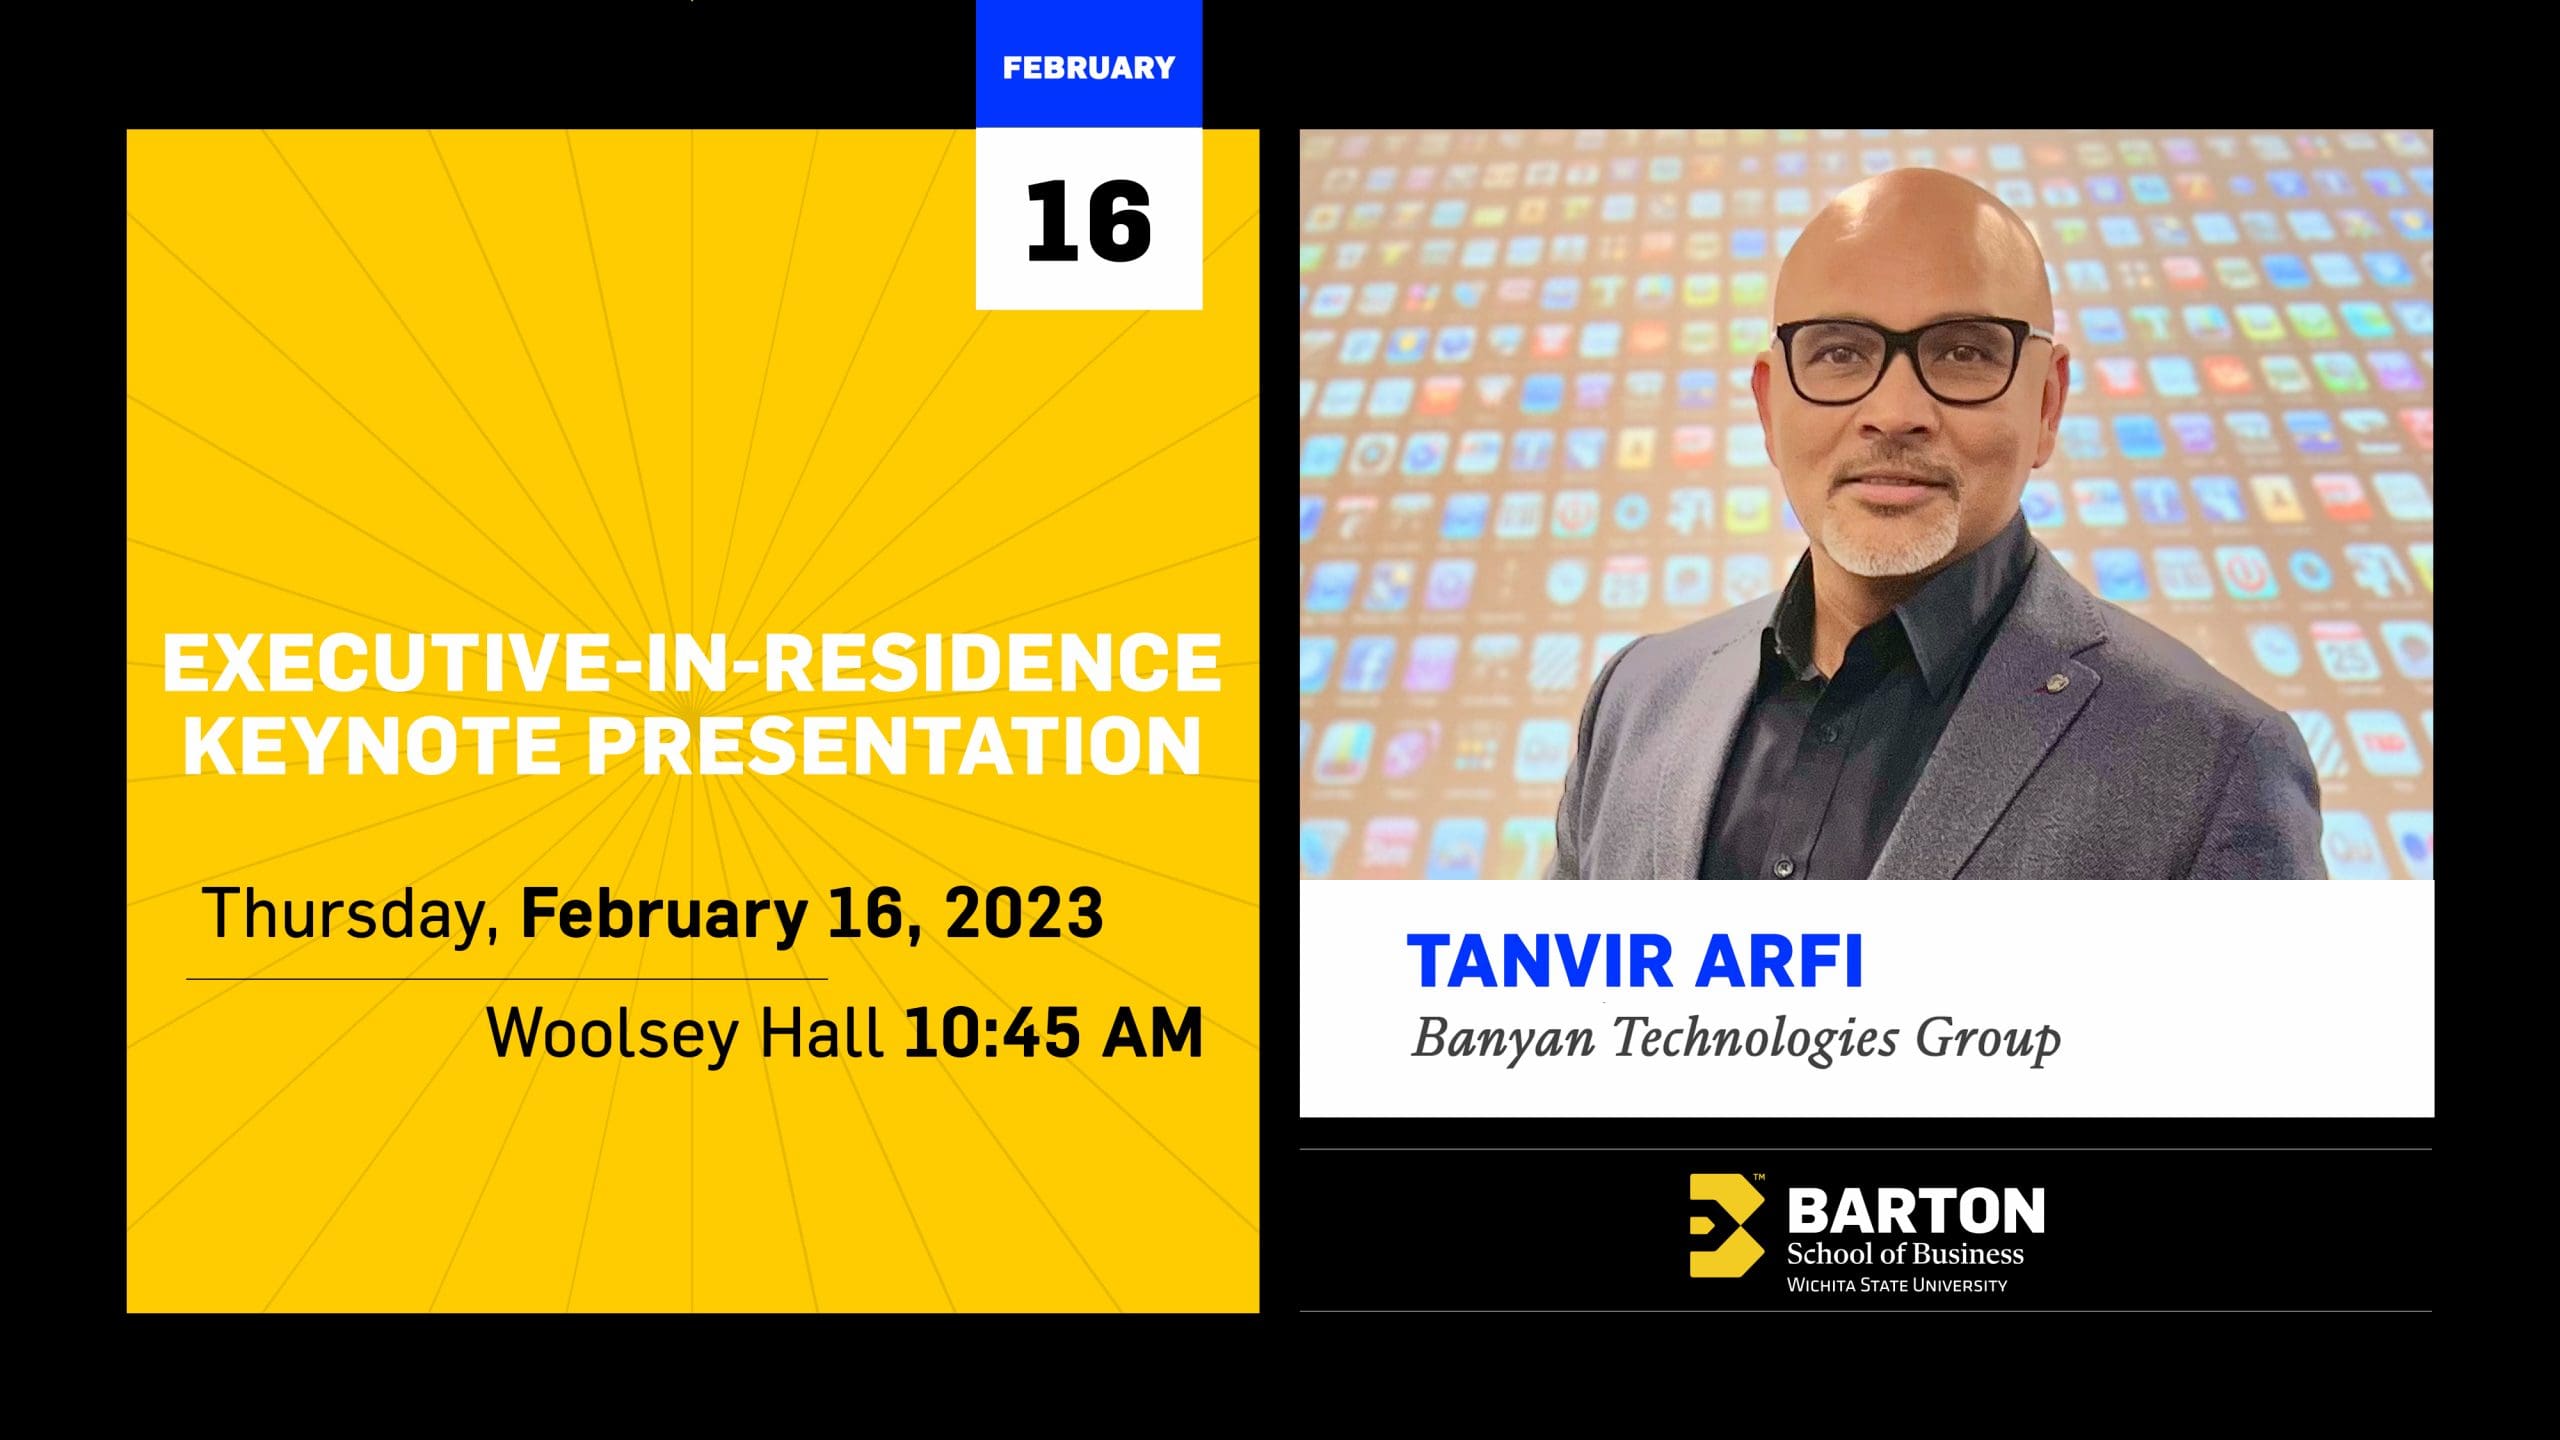 Executive-in-residence keynote presentation, 10:45 a.m. Thursday, Feb. 16 in the Woolsey Hall auditorium. Tanvir Arfi, Banyan Technologies Group. Barton School of Business logo.